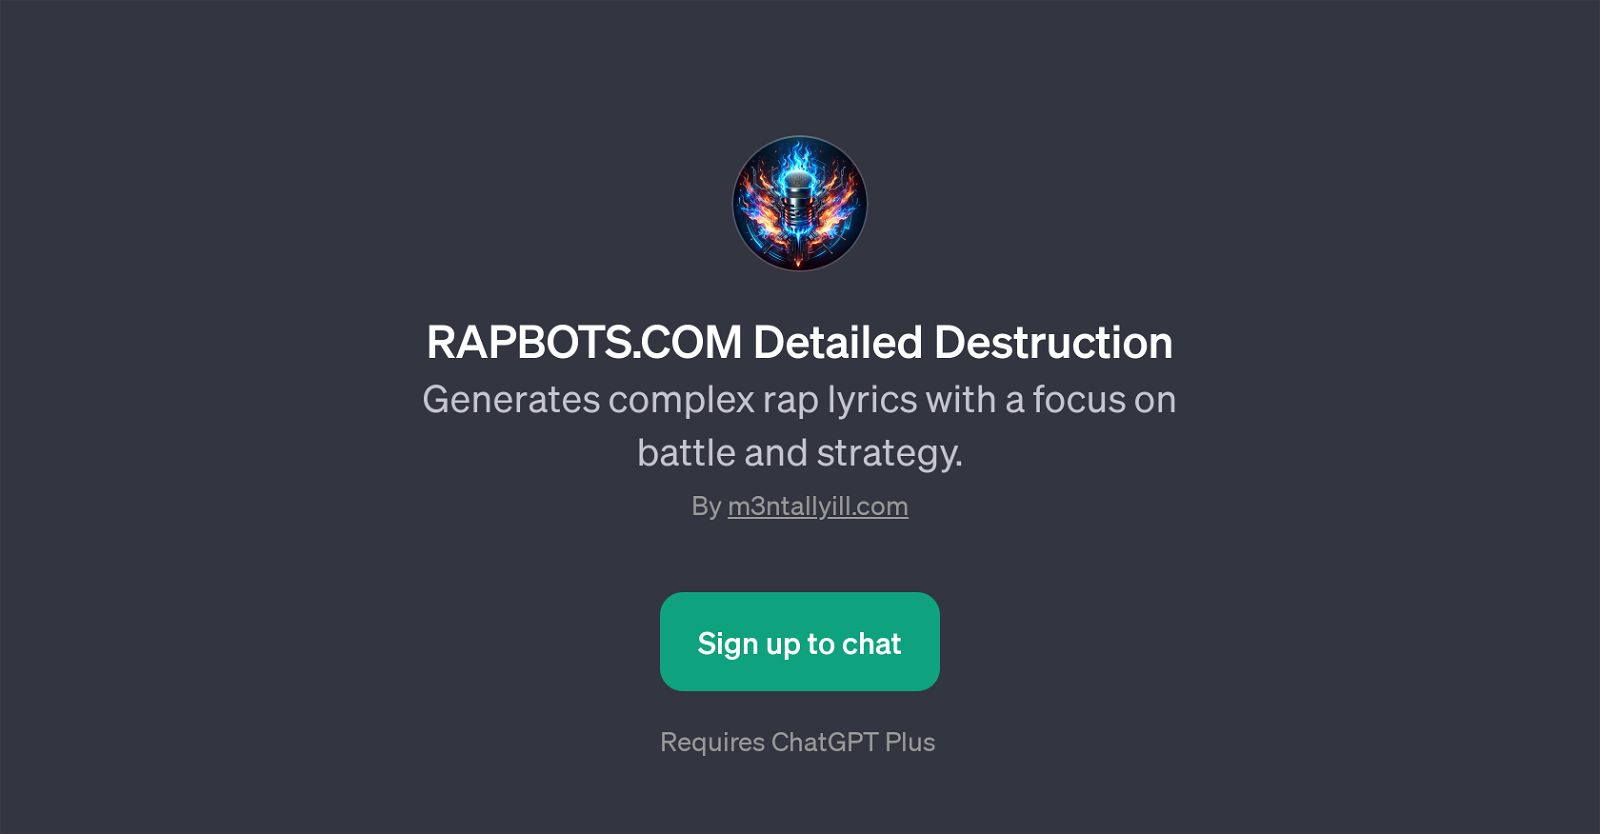 RAPBOTS.COM Detailed Destruction website